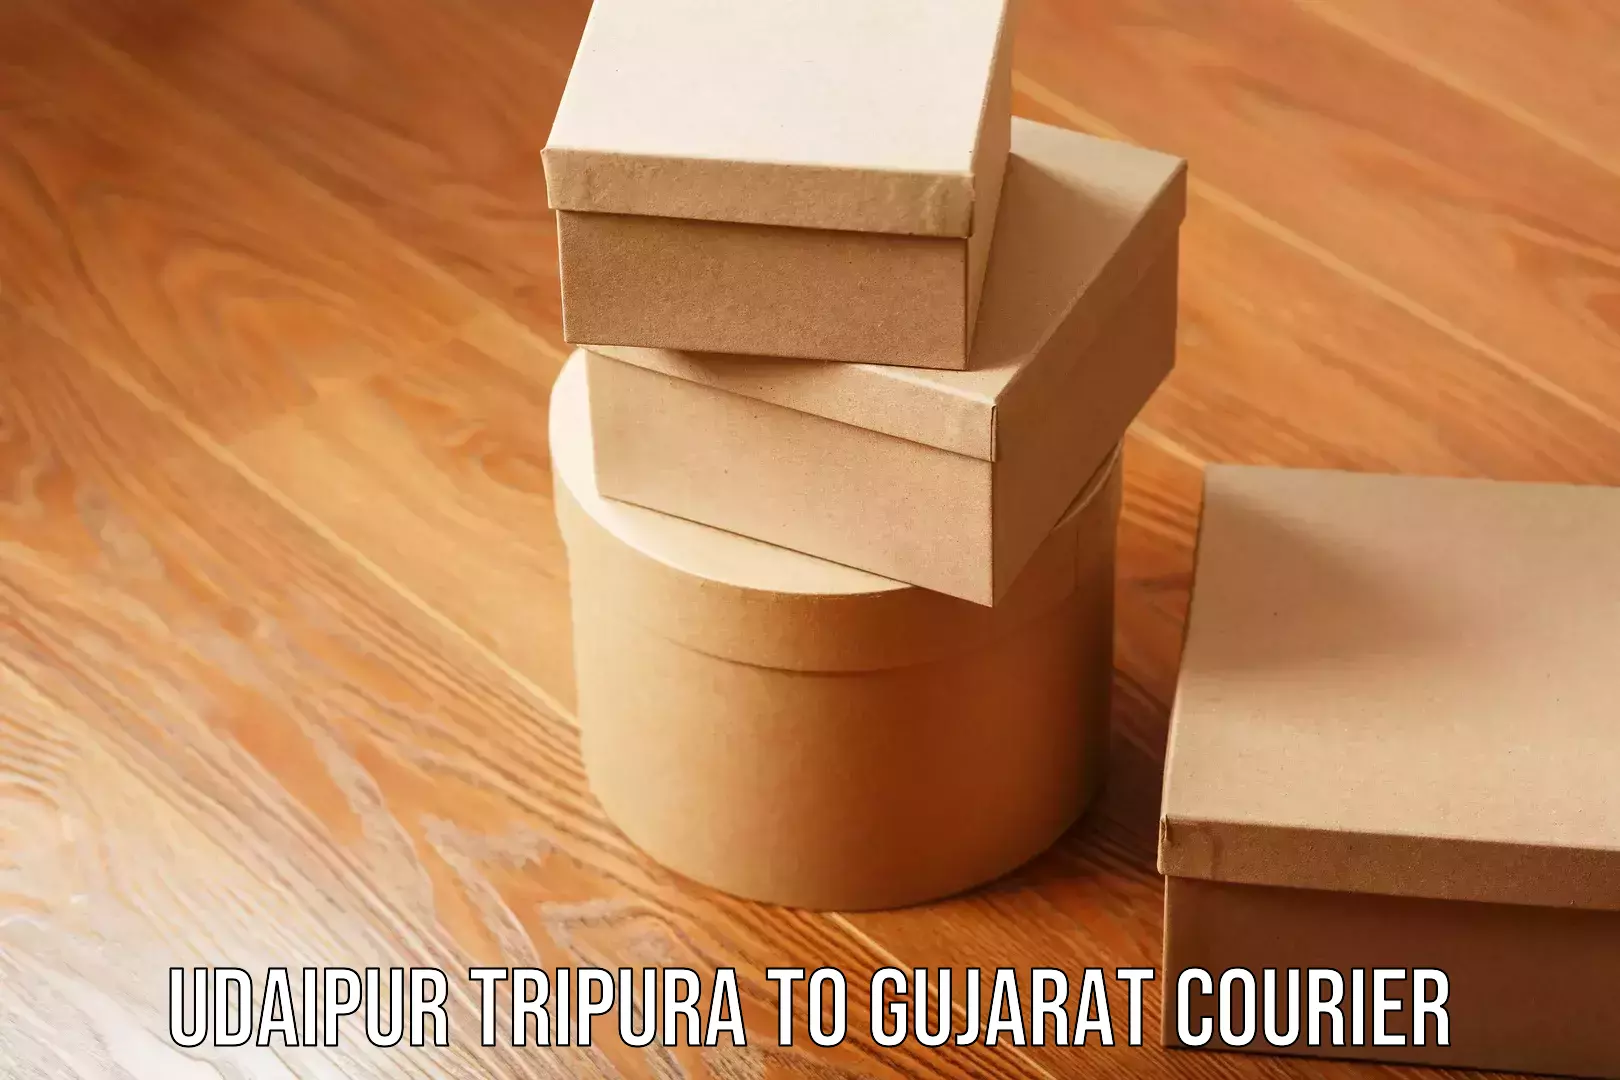 Customer-centric shipping Udaipur Tripura to Gujarat